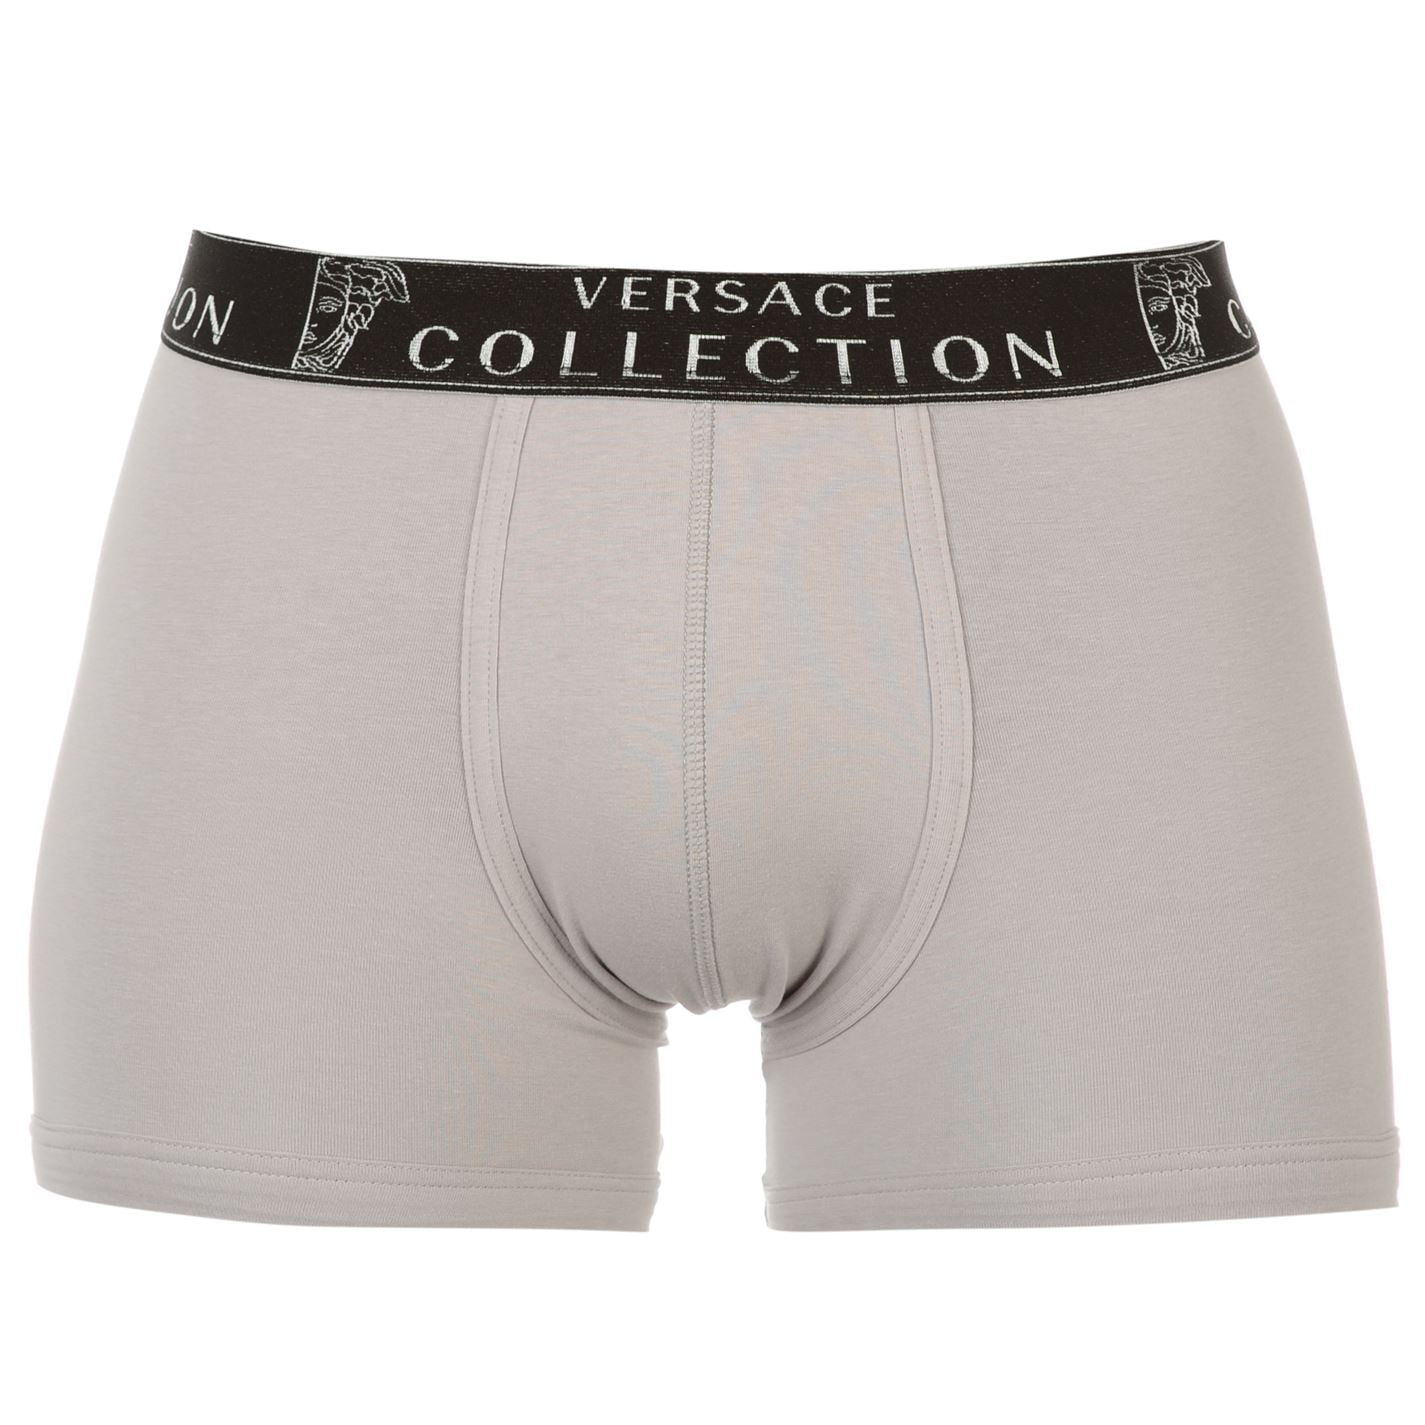 Versace Collection Men's Stretch Cotton 